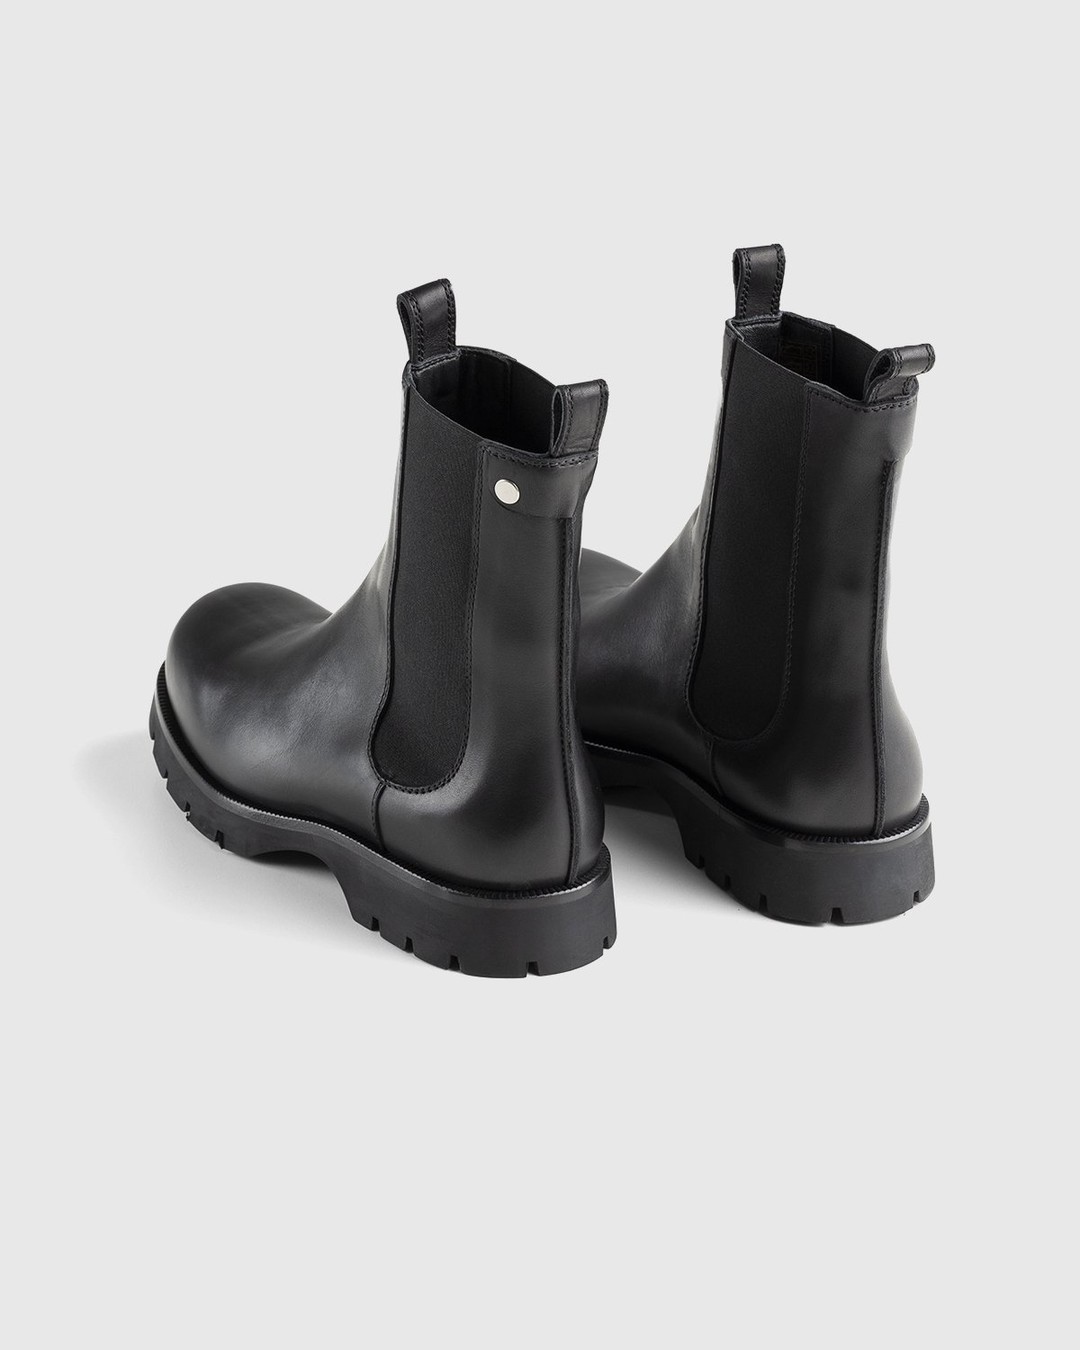 Jil Sander – Chelsea Boots Black - Chelsea Boots - Black - Image 4